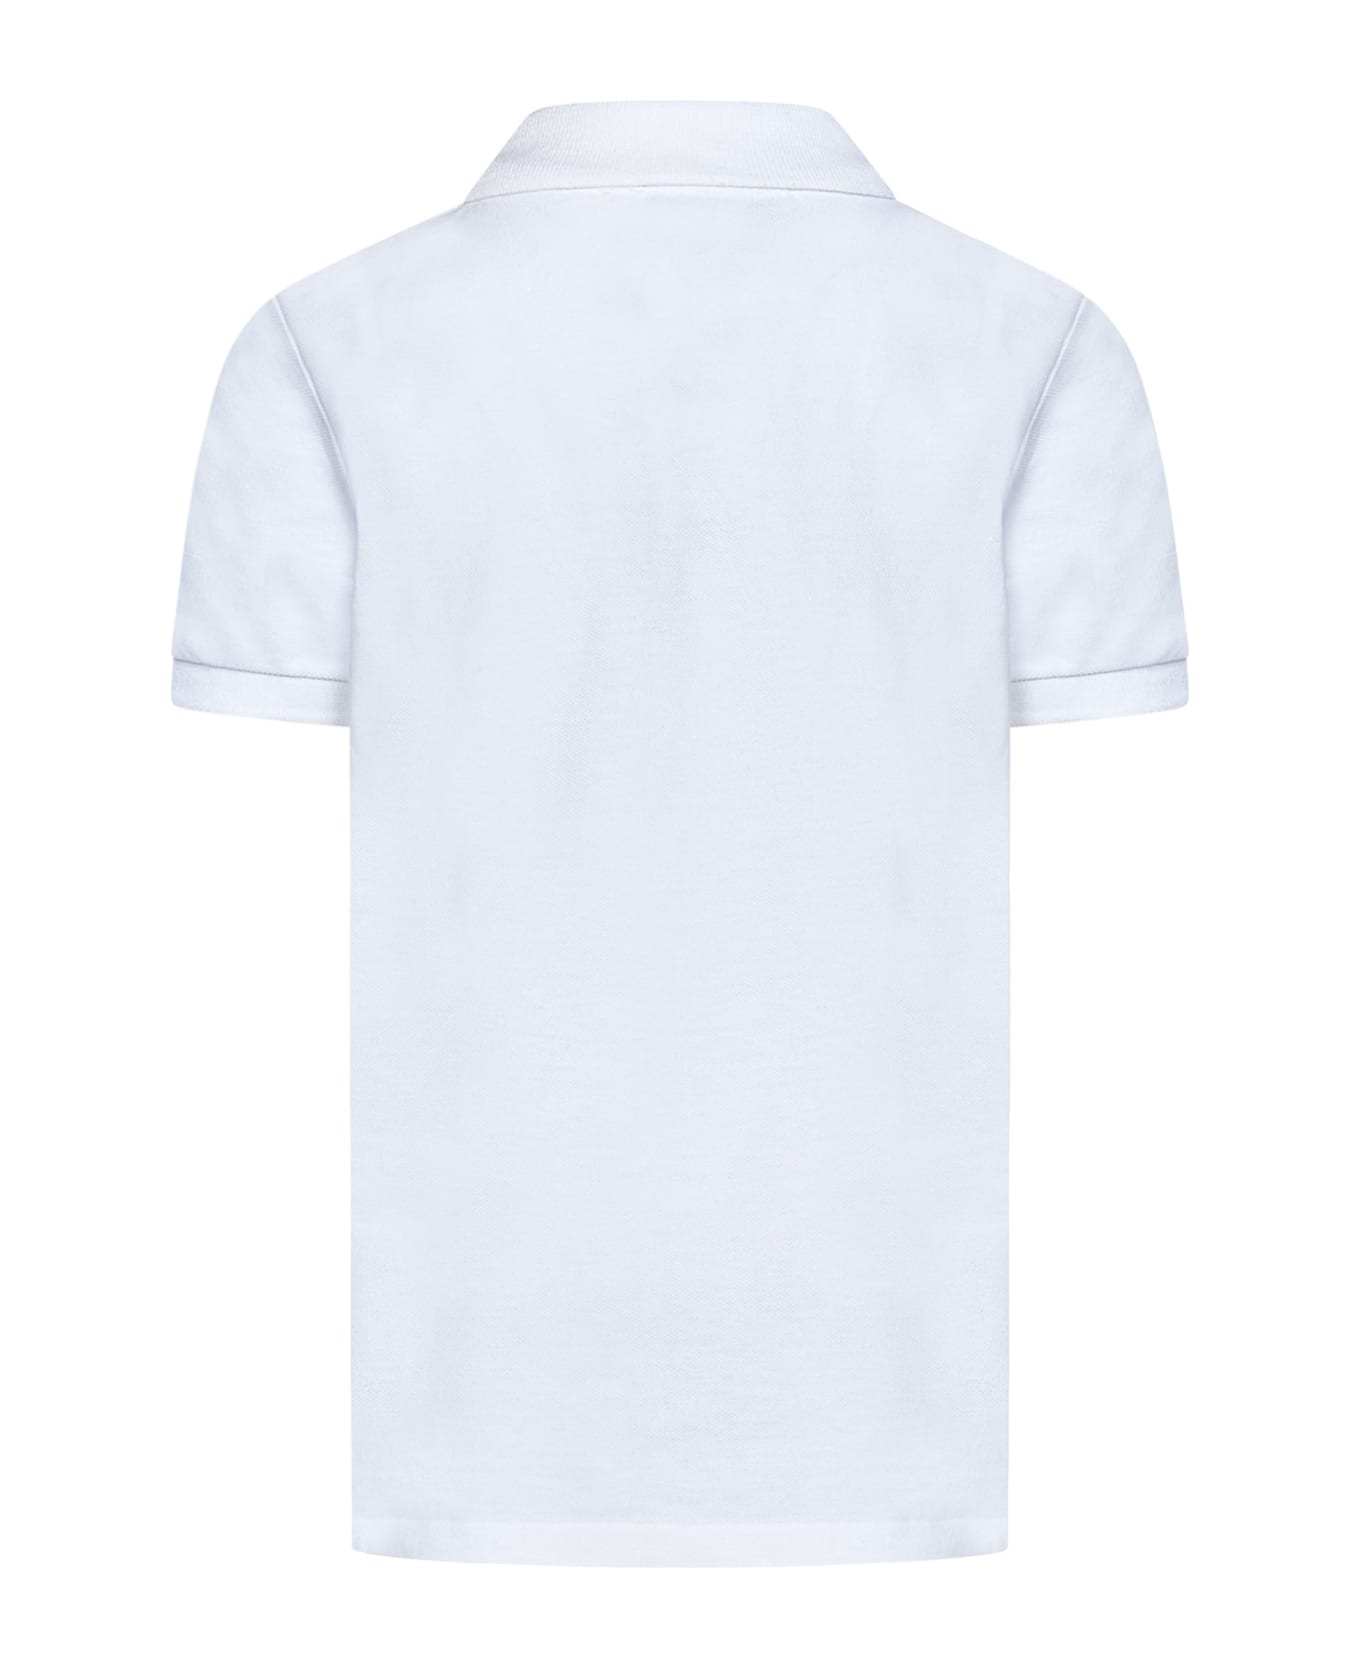 Polo Ralph Lauren Polo Shirt - Bianco